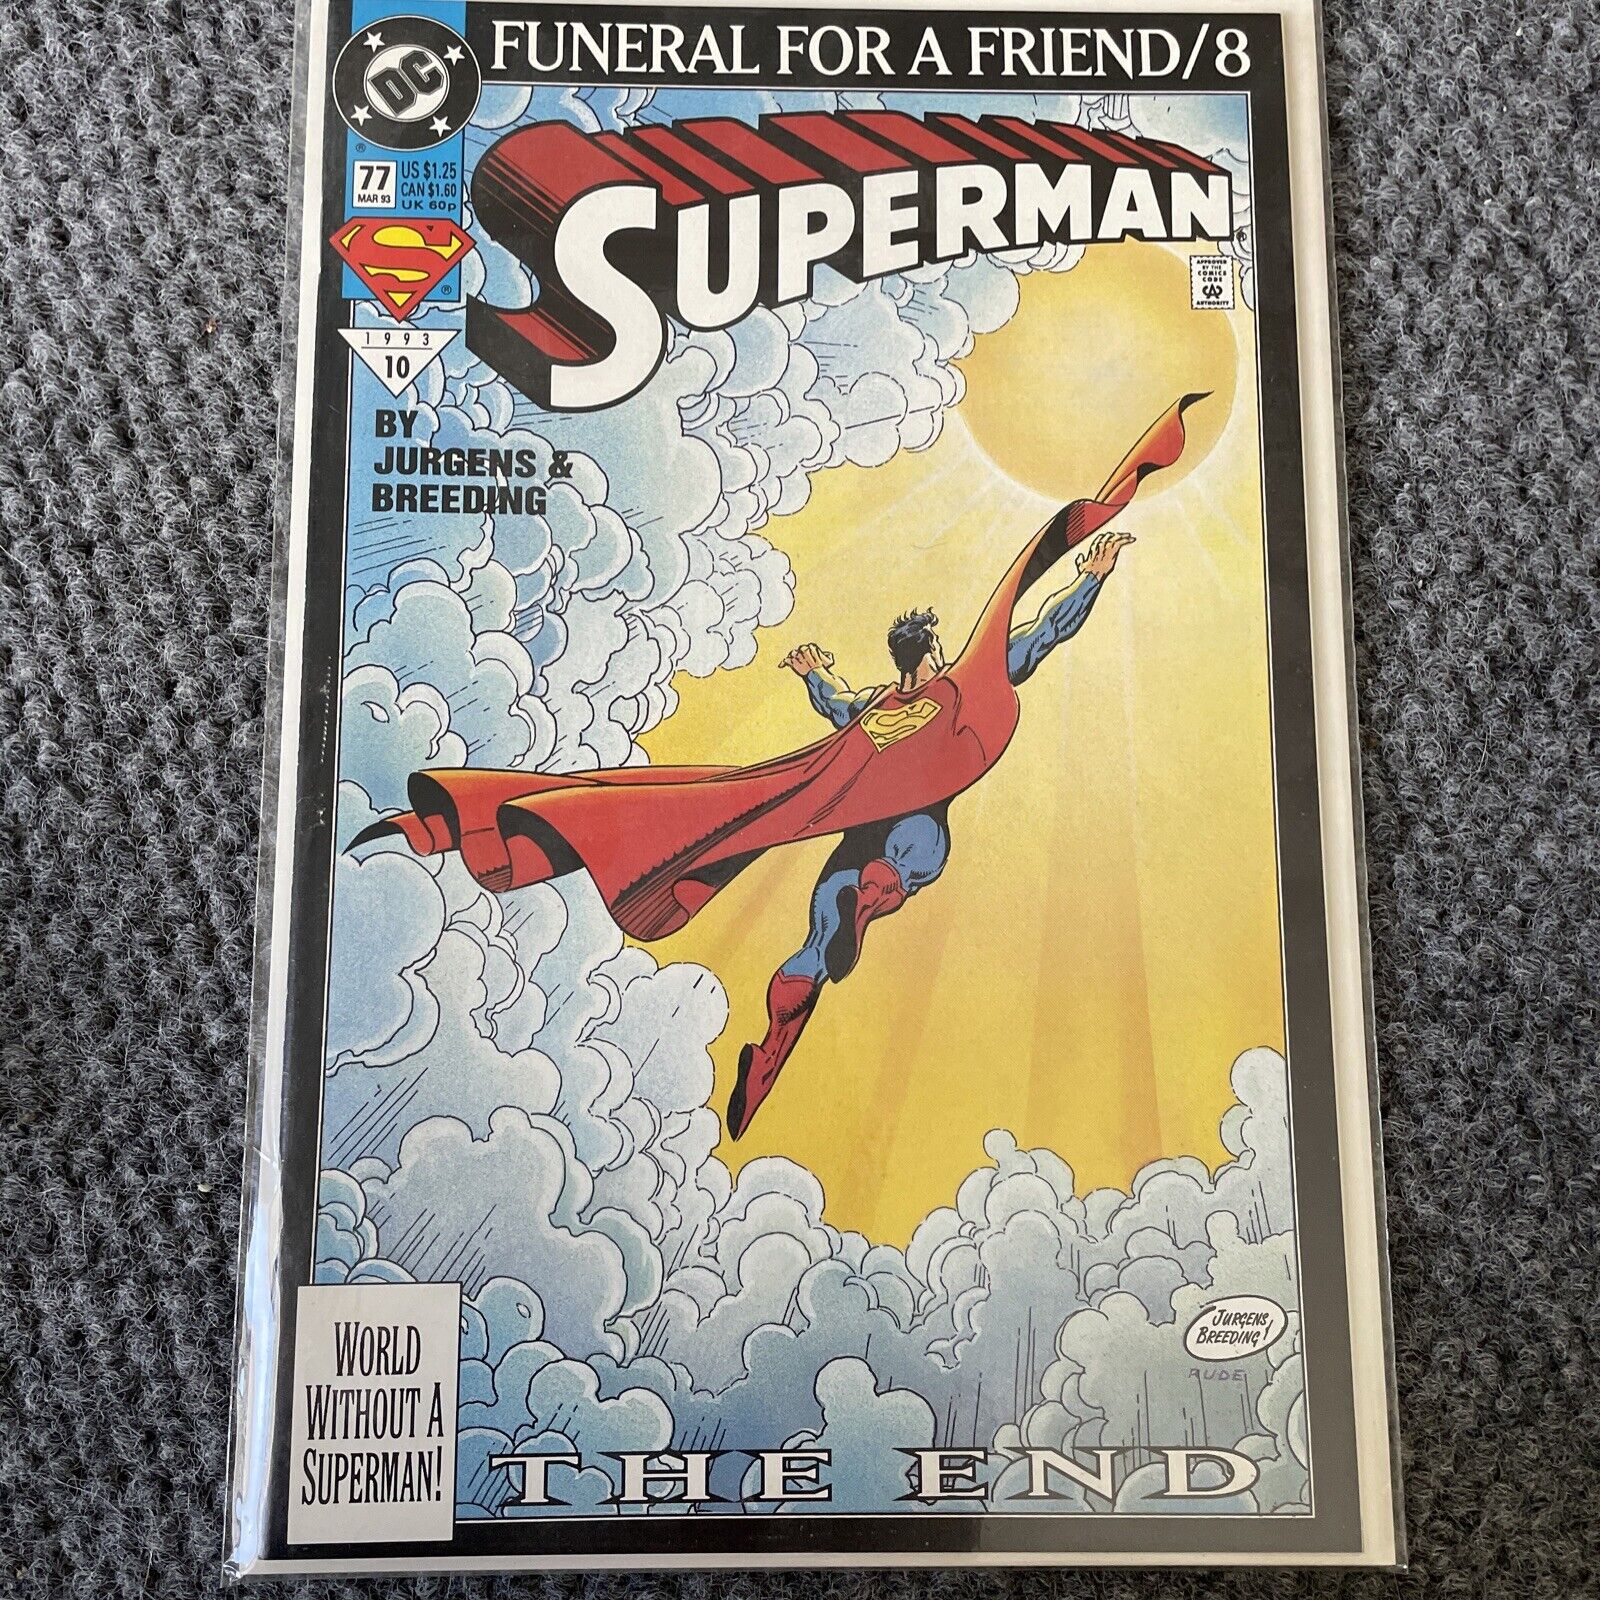 Superman # 77 (Mar, 1993) Funeral For A Friend/8 (DC Comics) (VF)